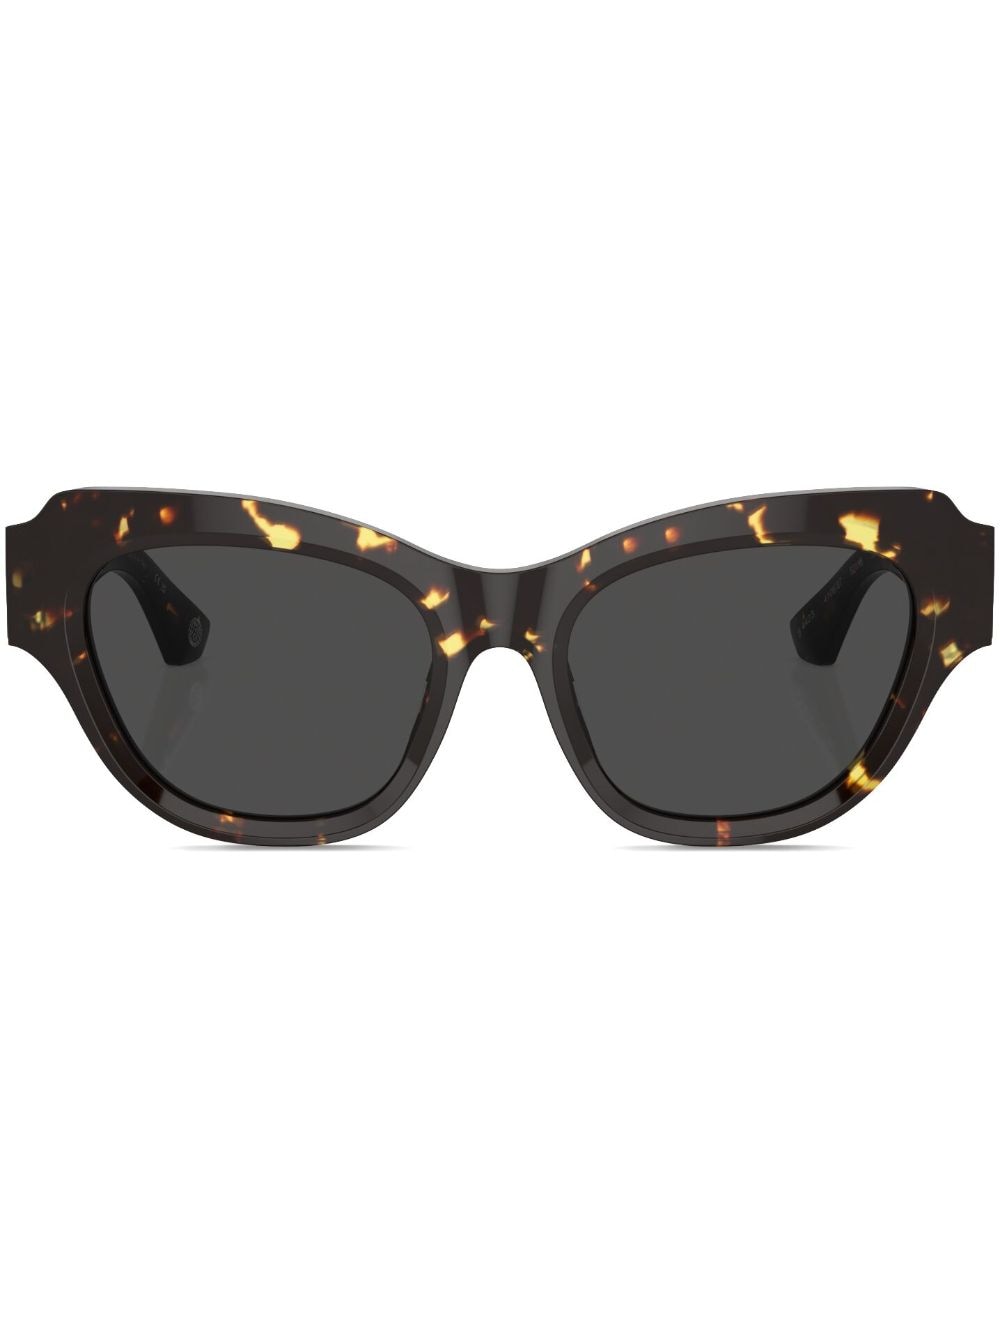 Burberry Eyewear tortoiseshell cat-eye sunglasses - Brown von Burberry Eyewear